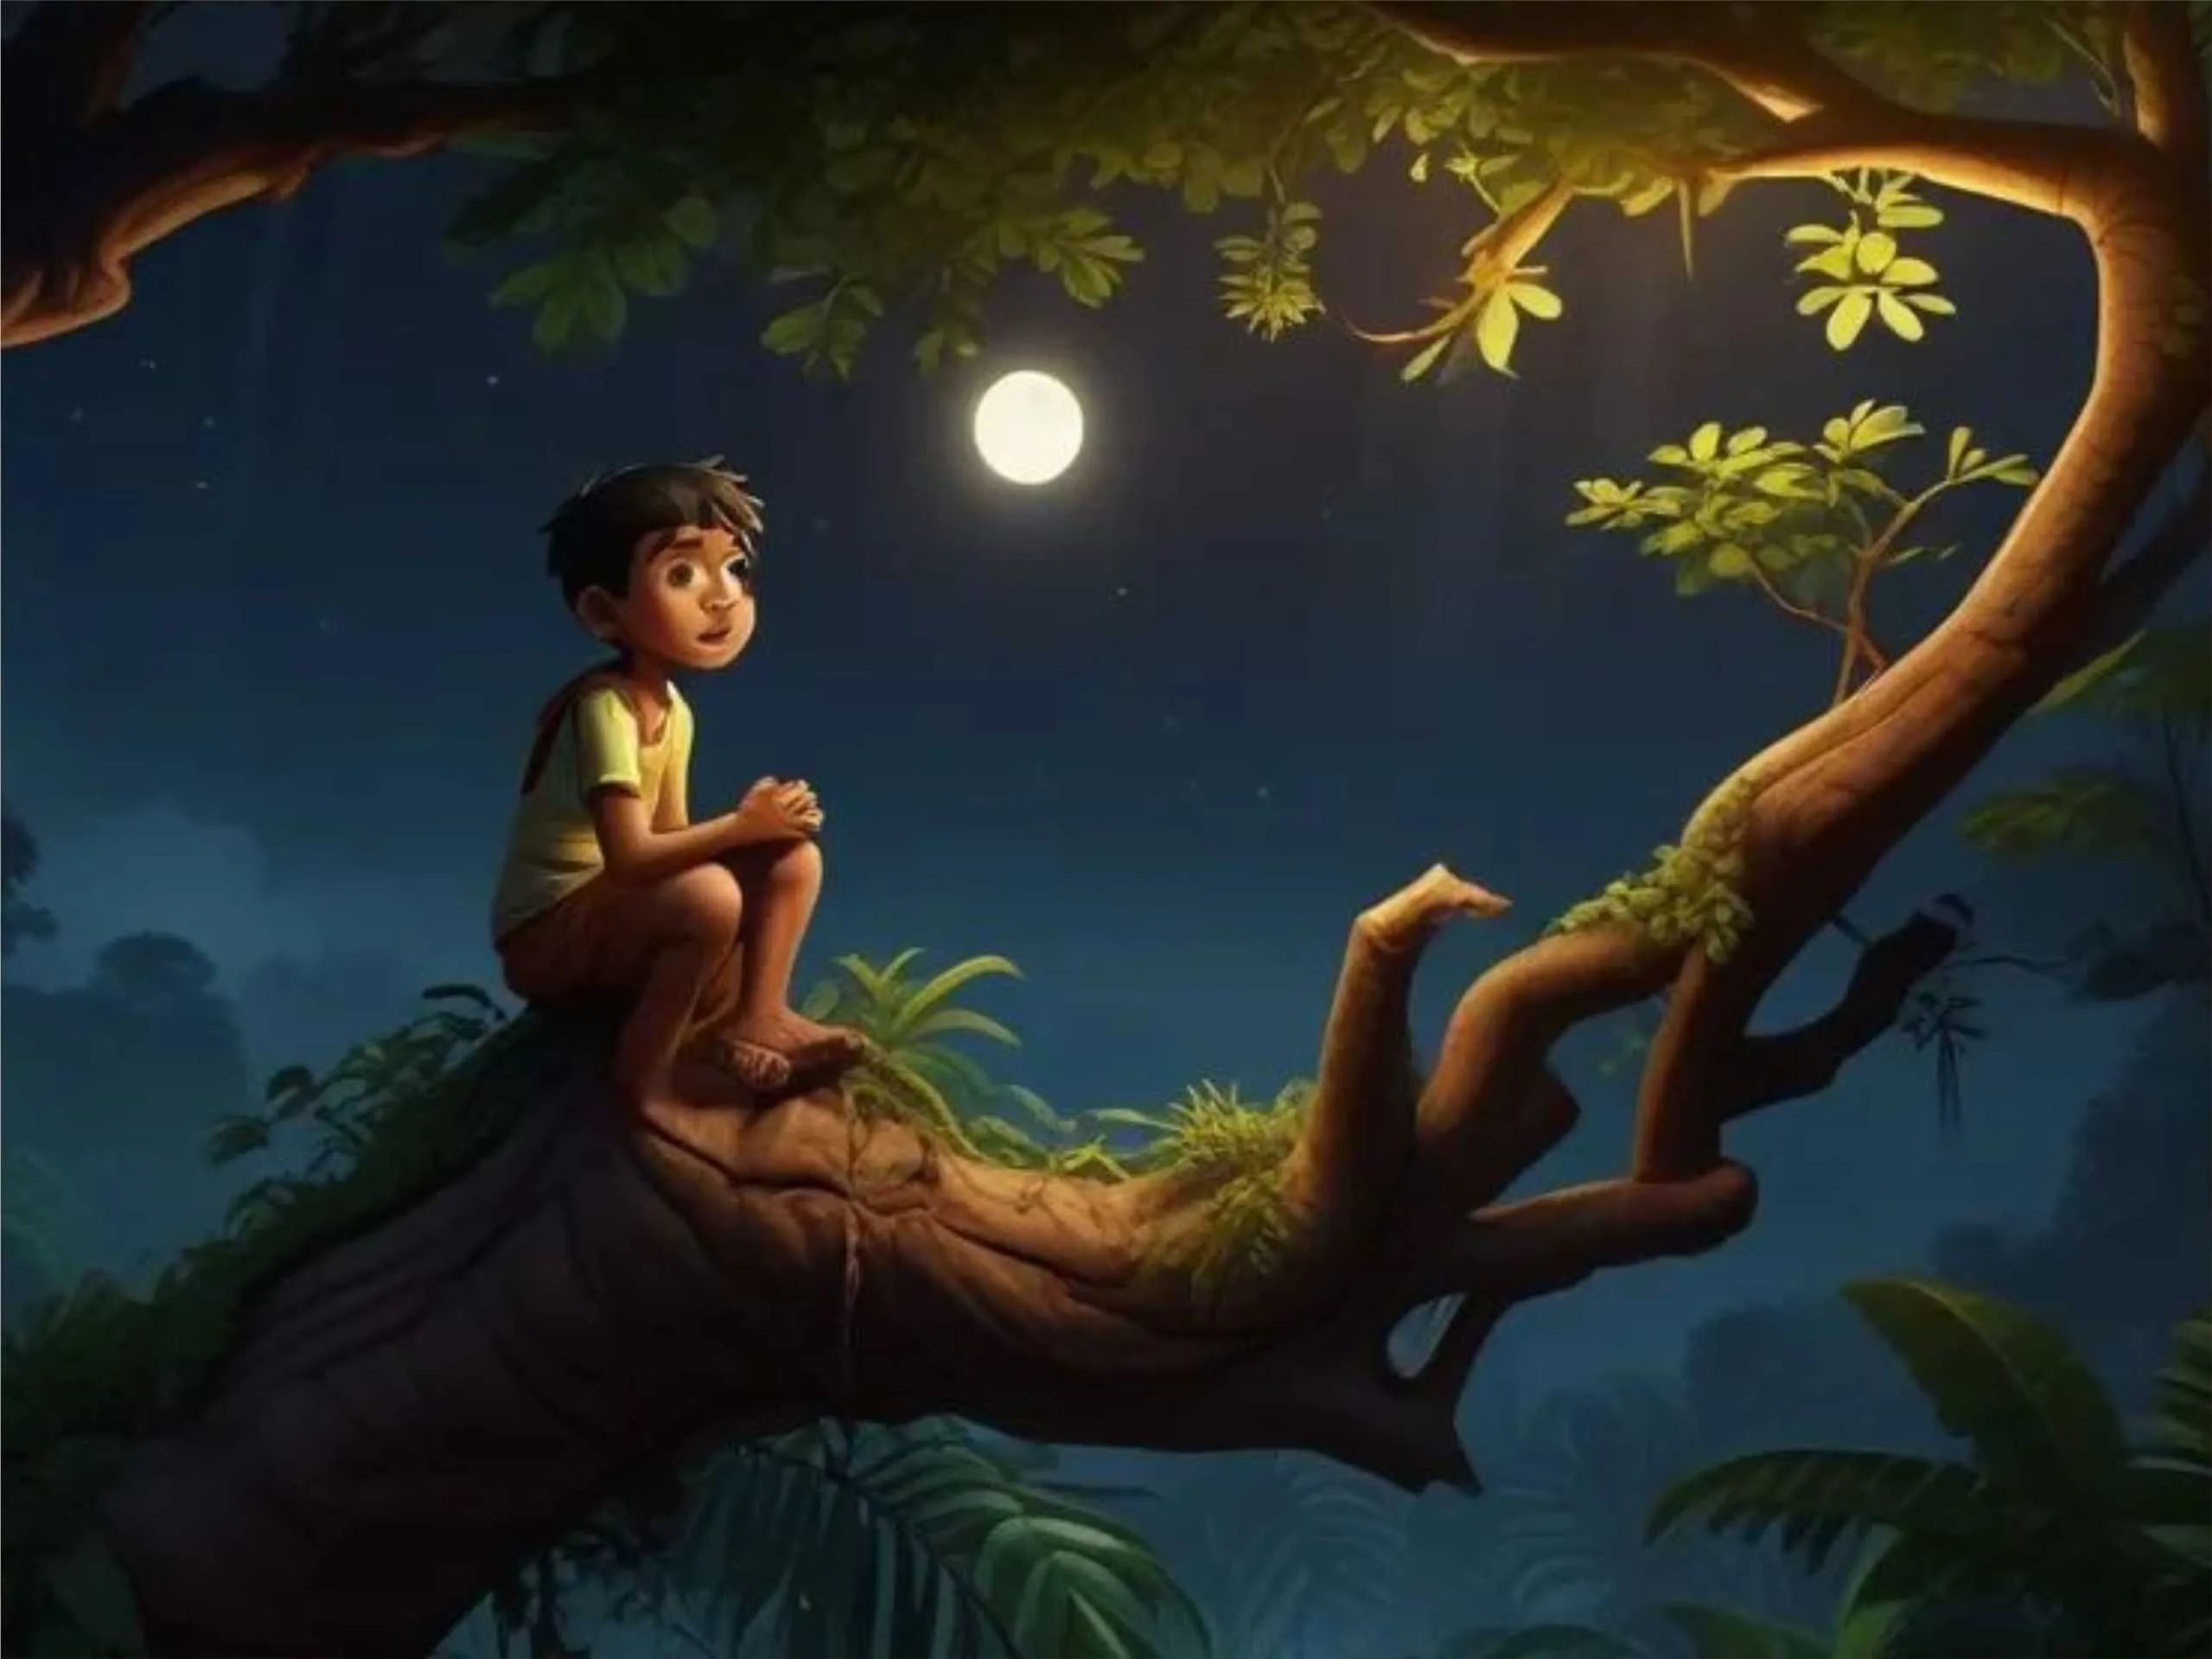 Boy on top of a tree cartoon image